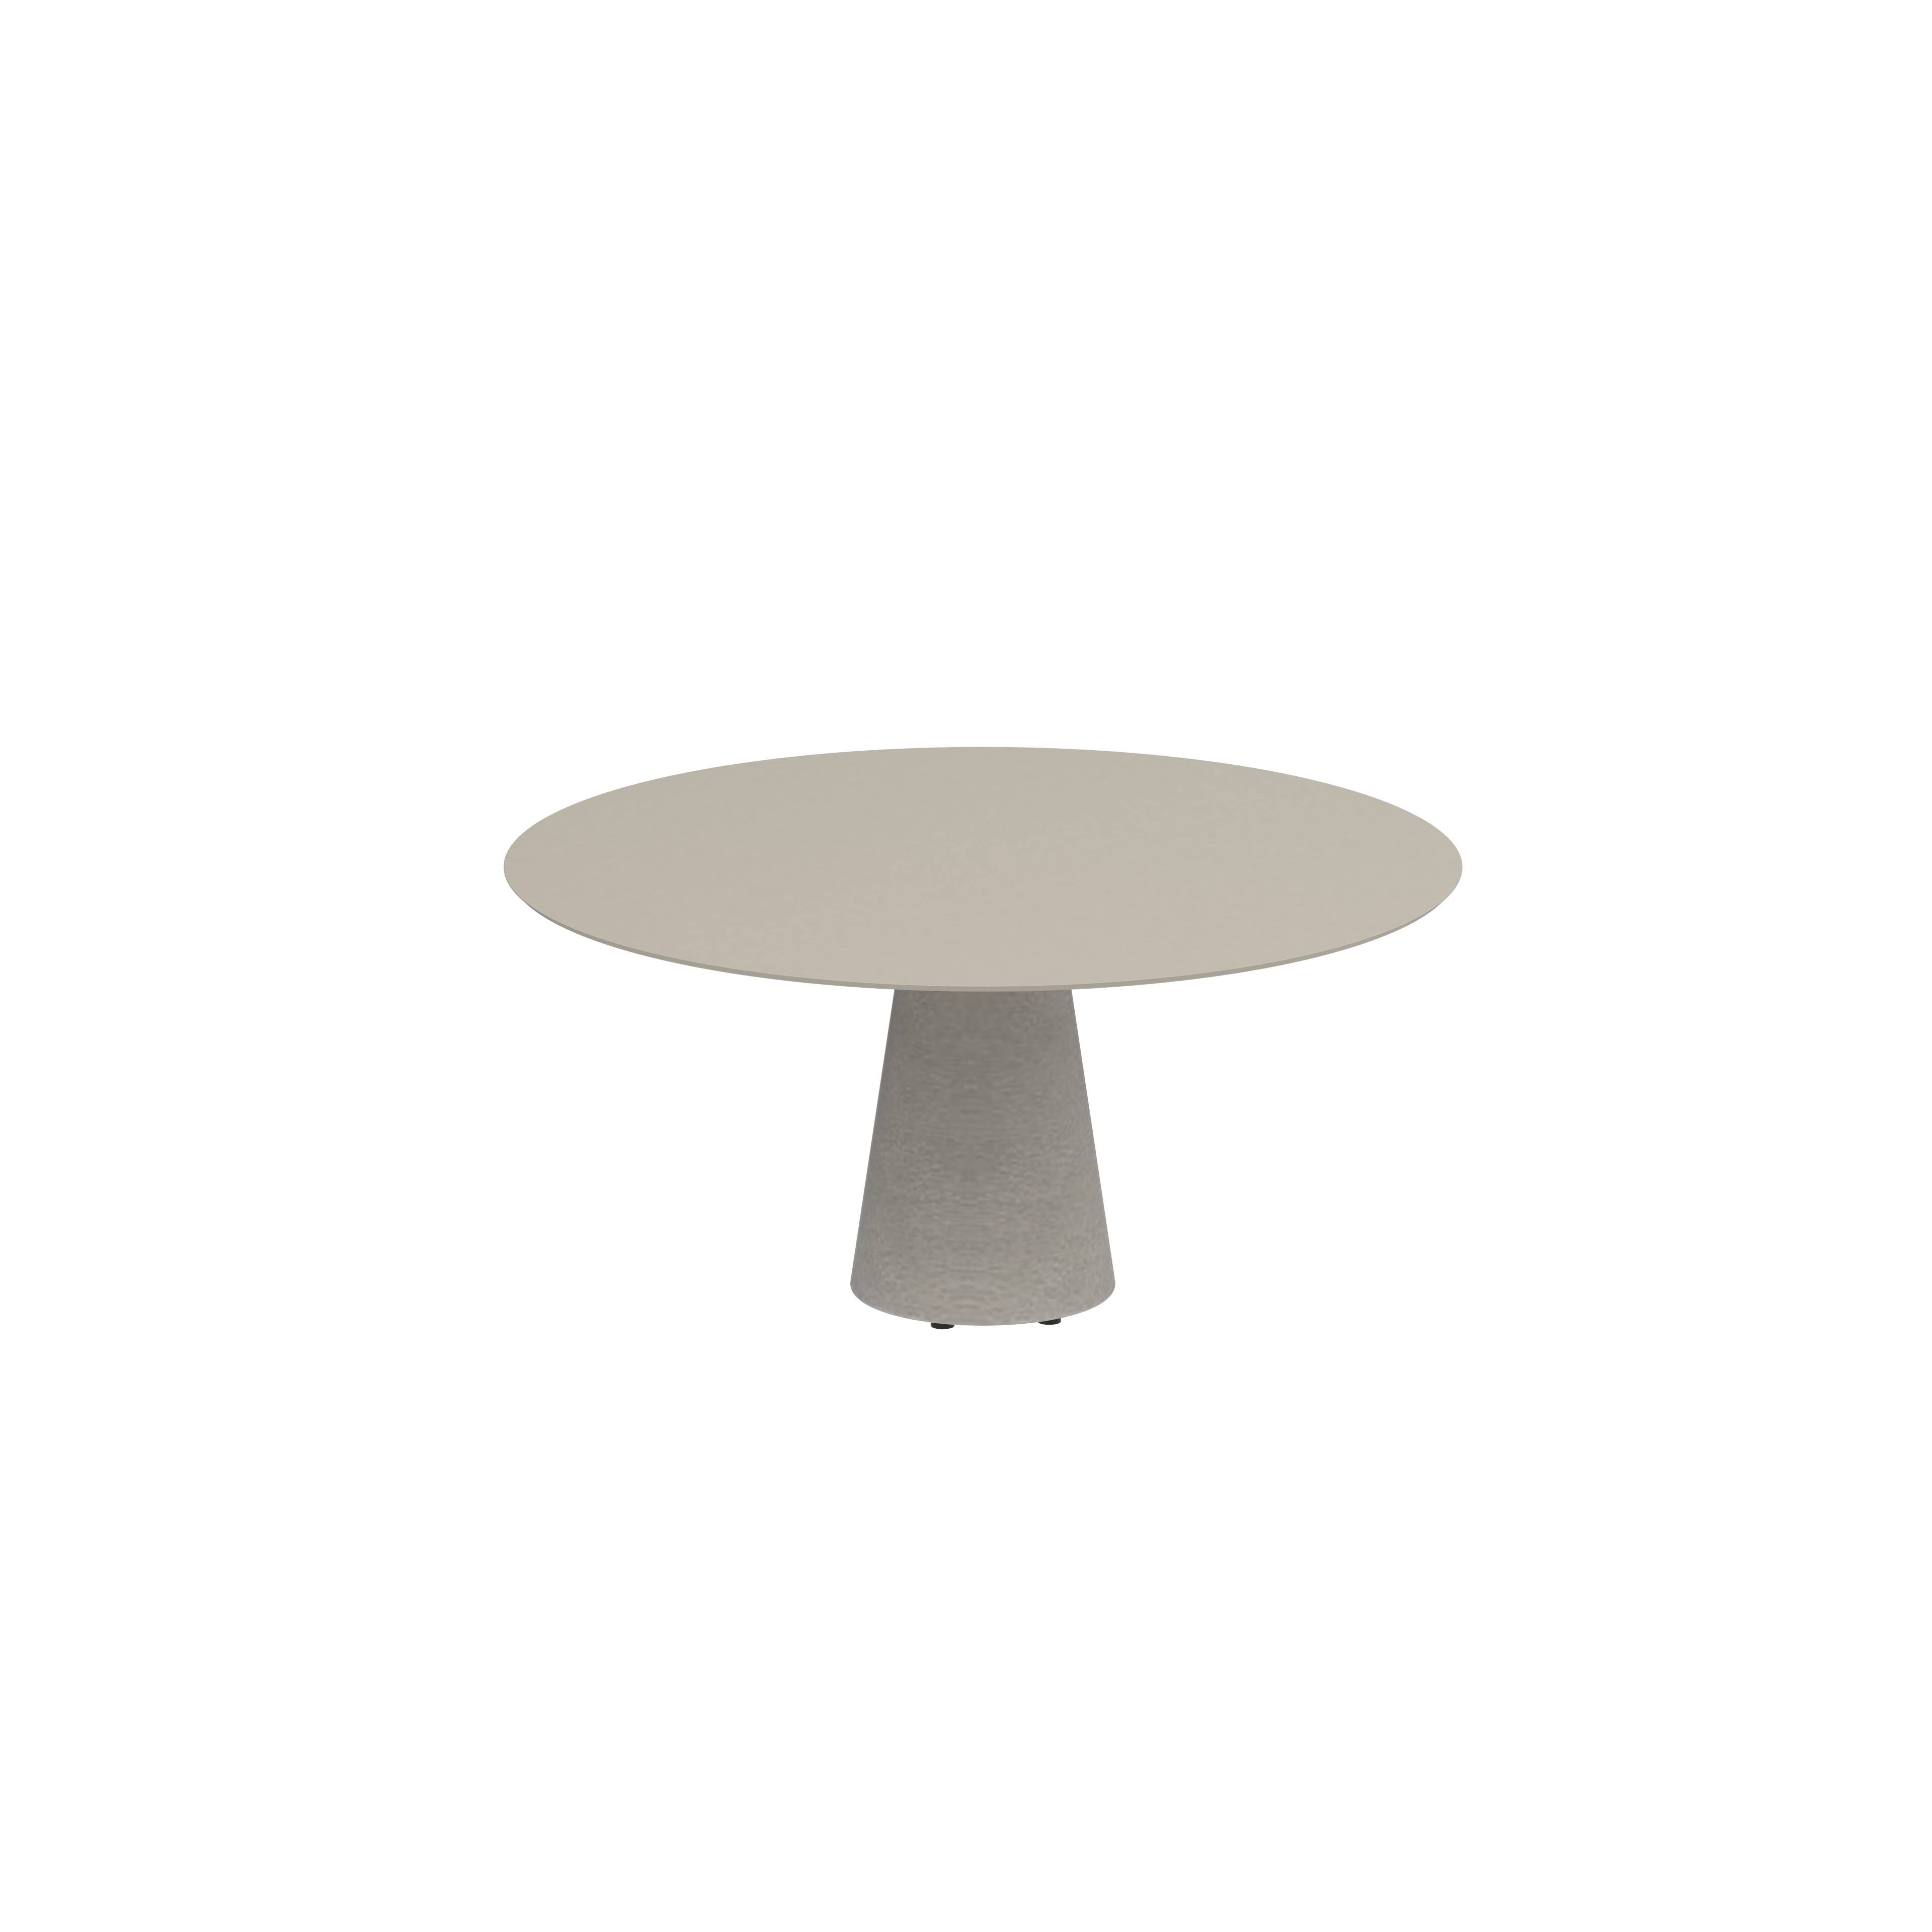 Conix Table Round Ø 160cm Legs Concrete Cement Grey - Tabletop Ceramic Pearl Grey